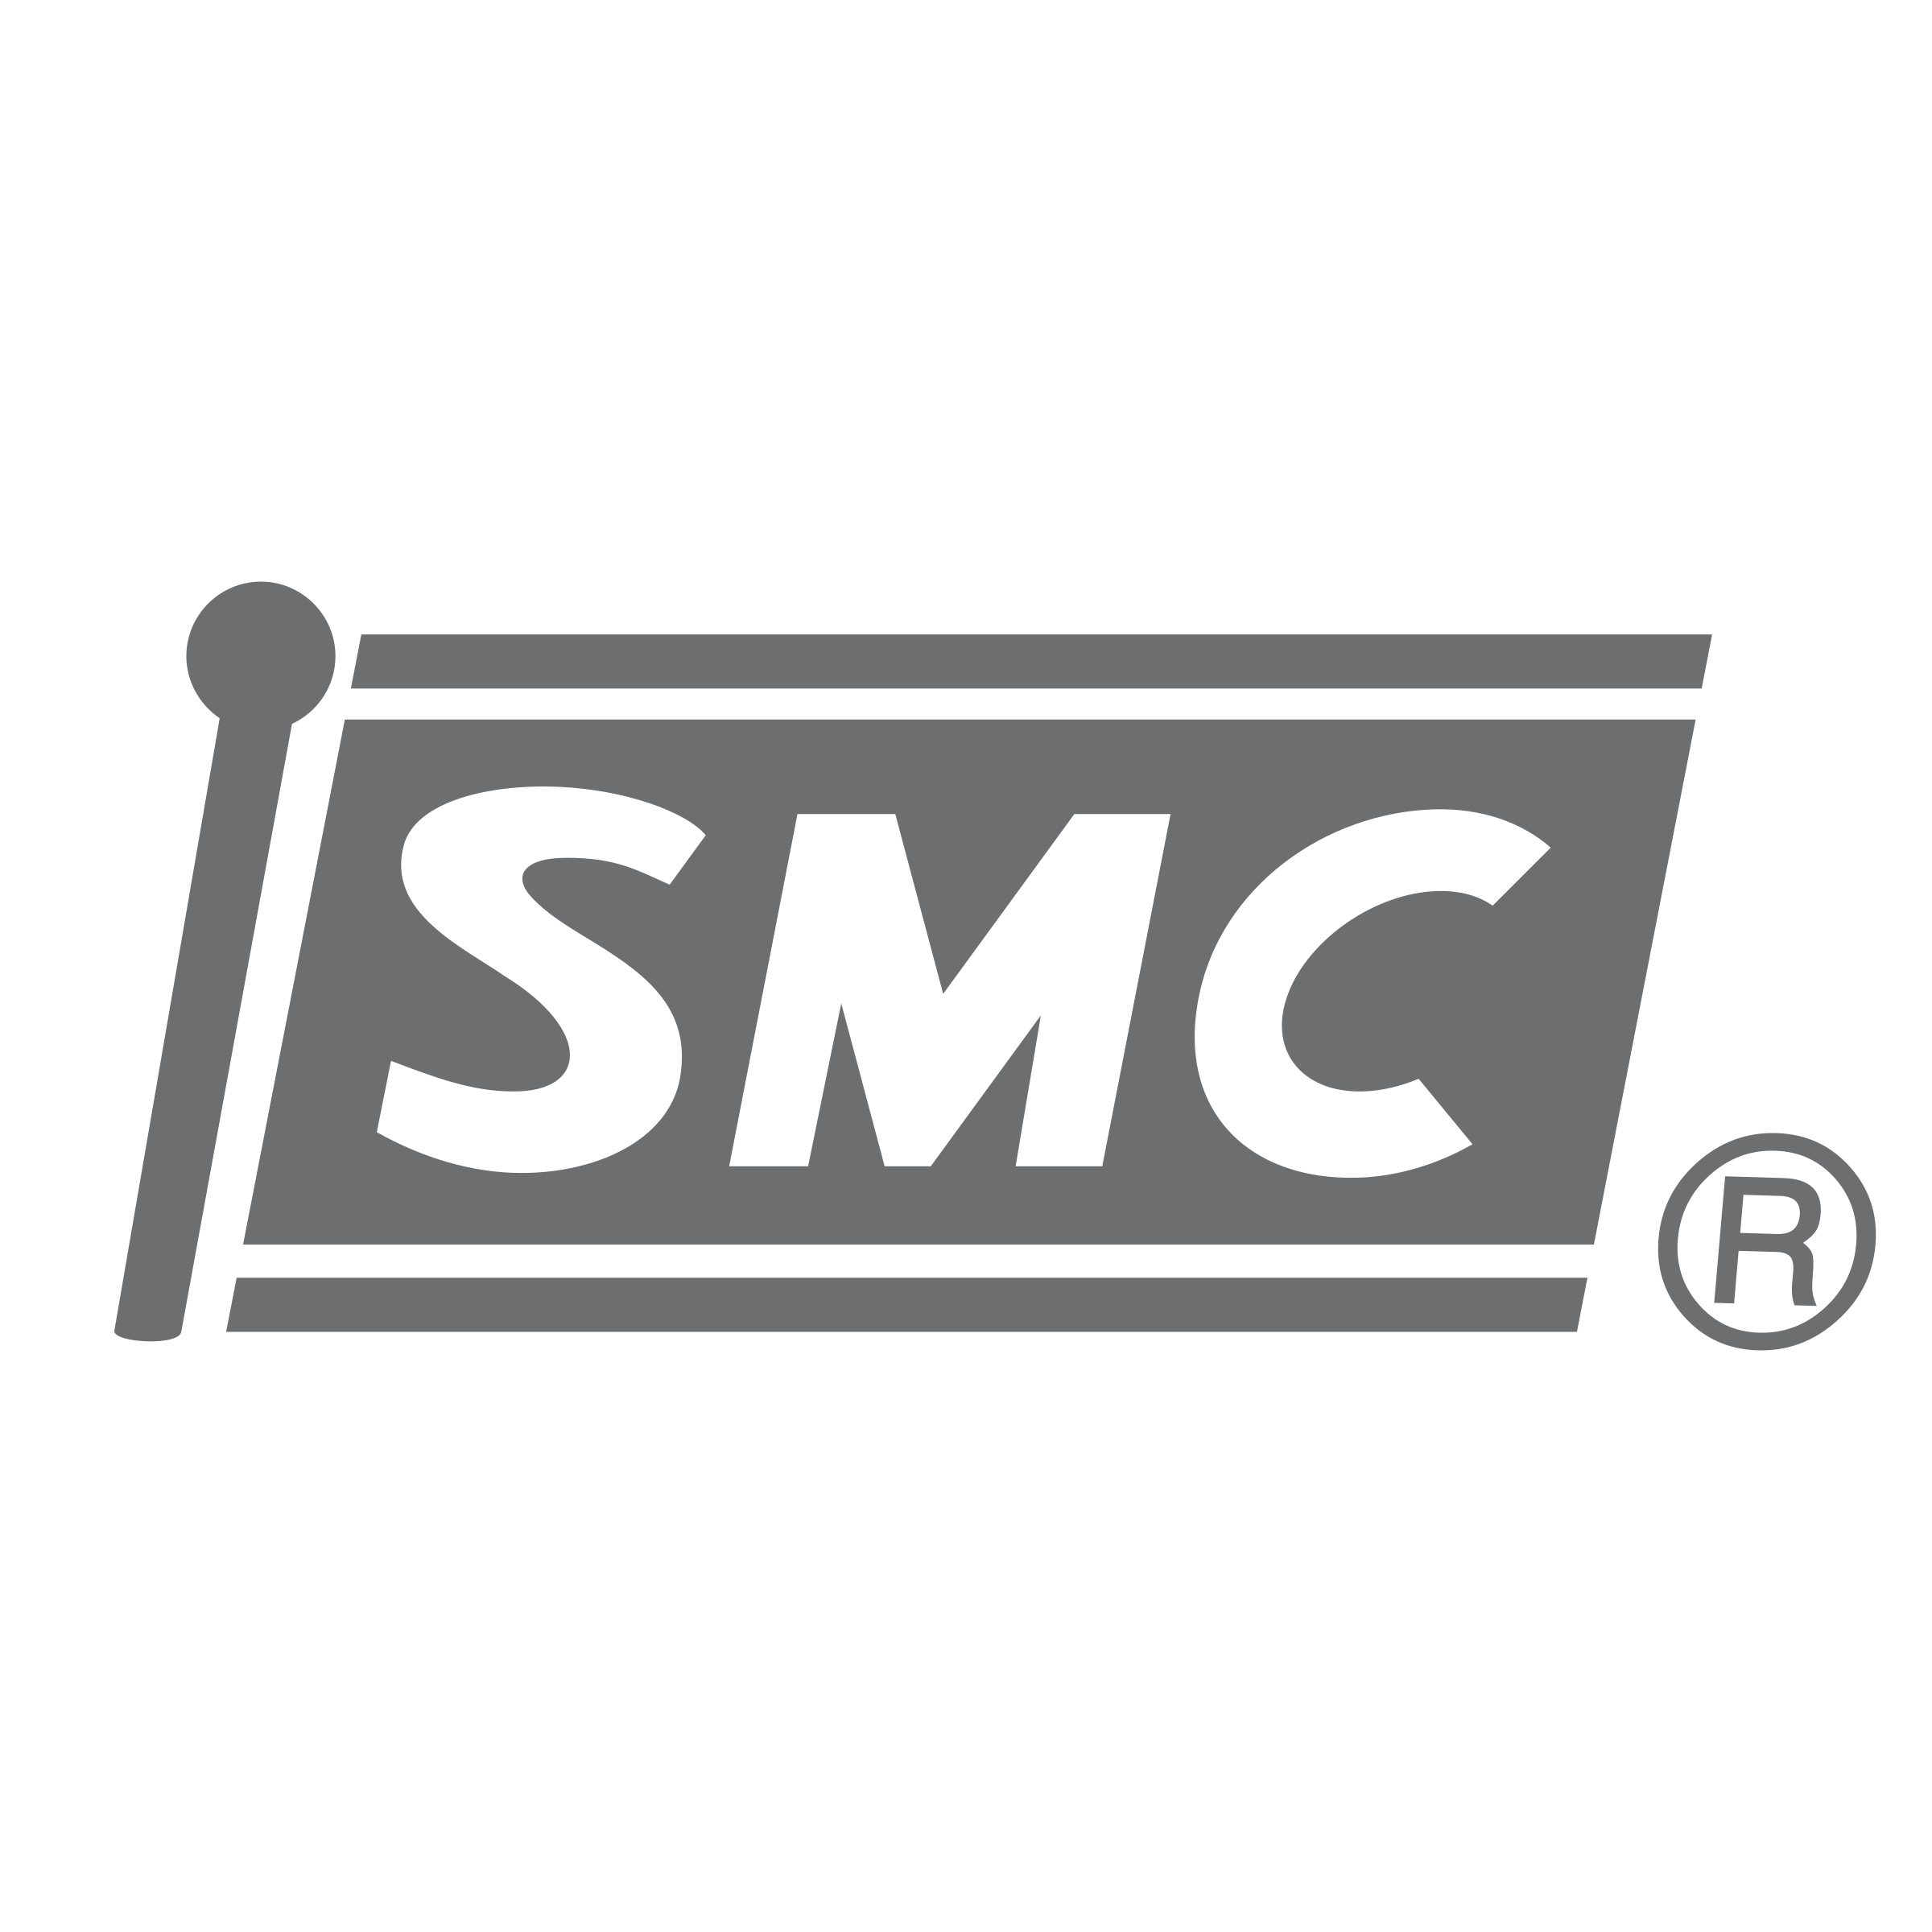 SMC Logo - SMC Logo PNG Transparent & SVG Vector